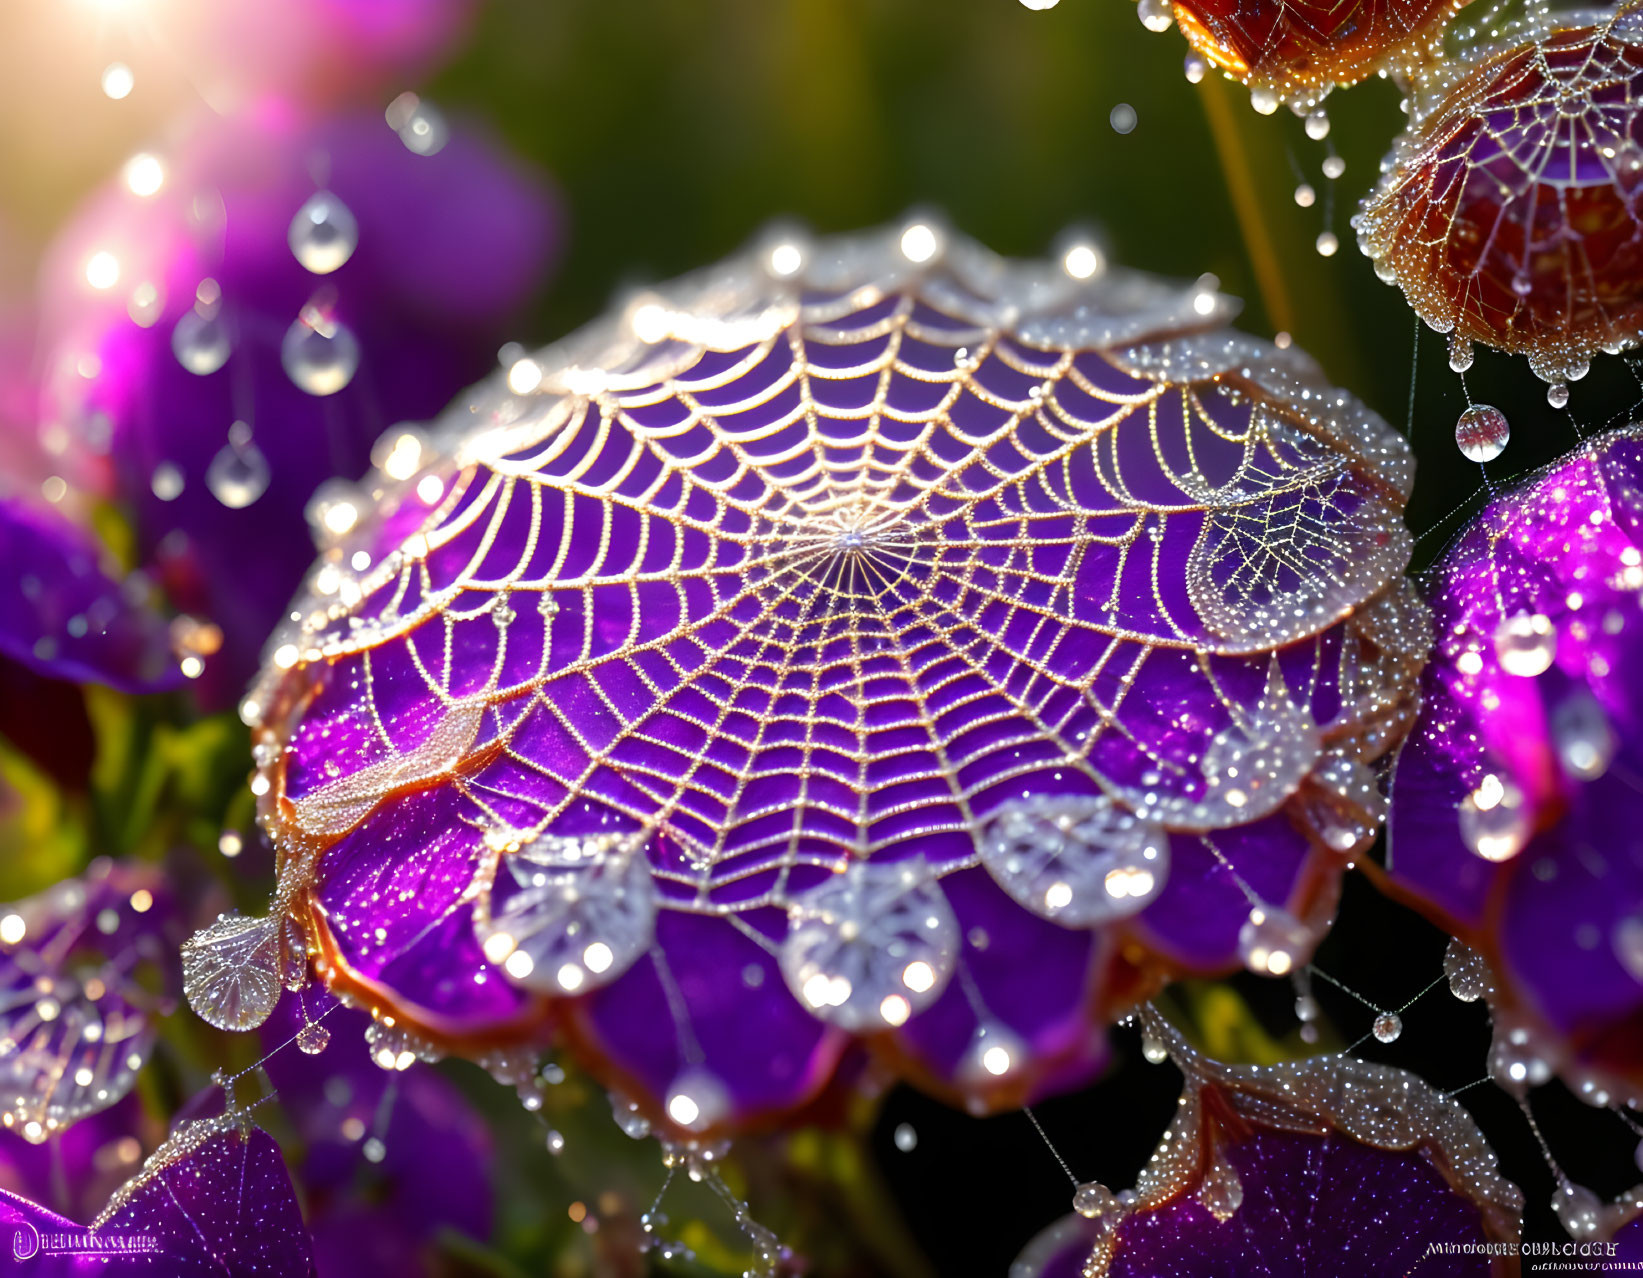 Spiderweb-art